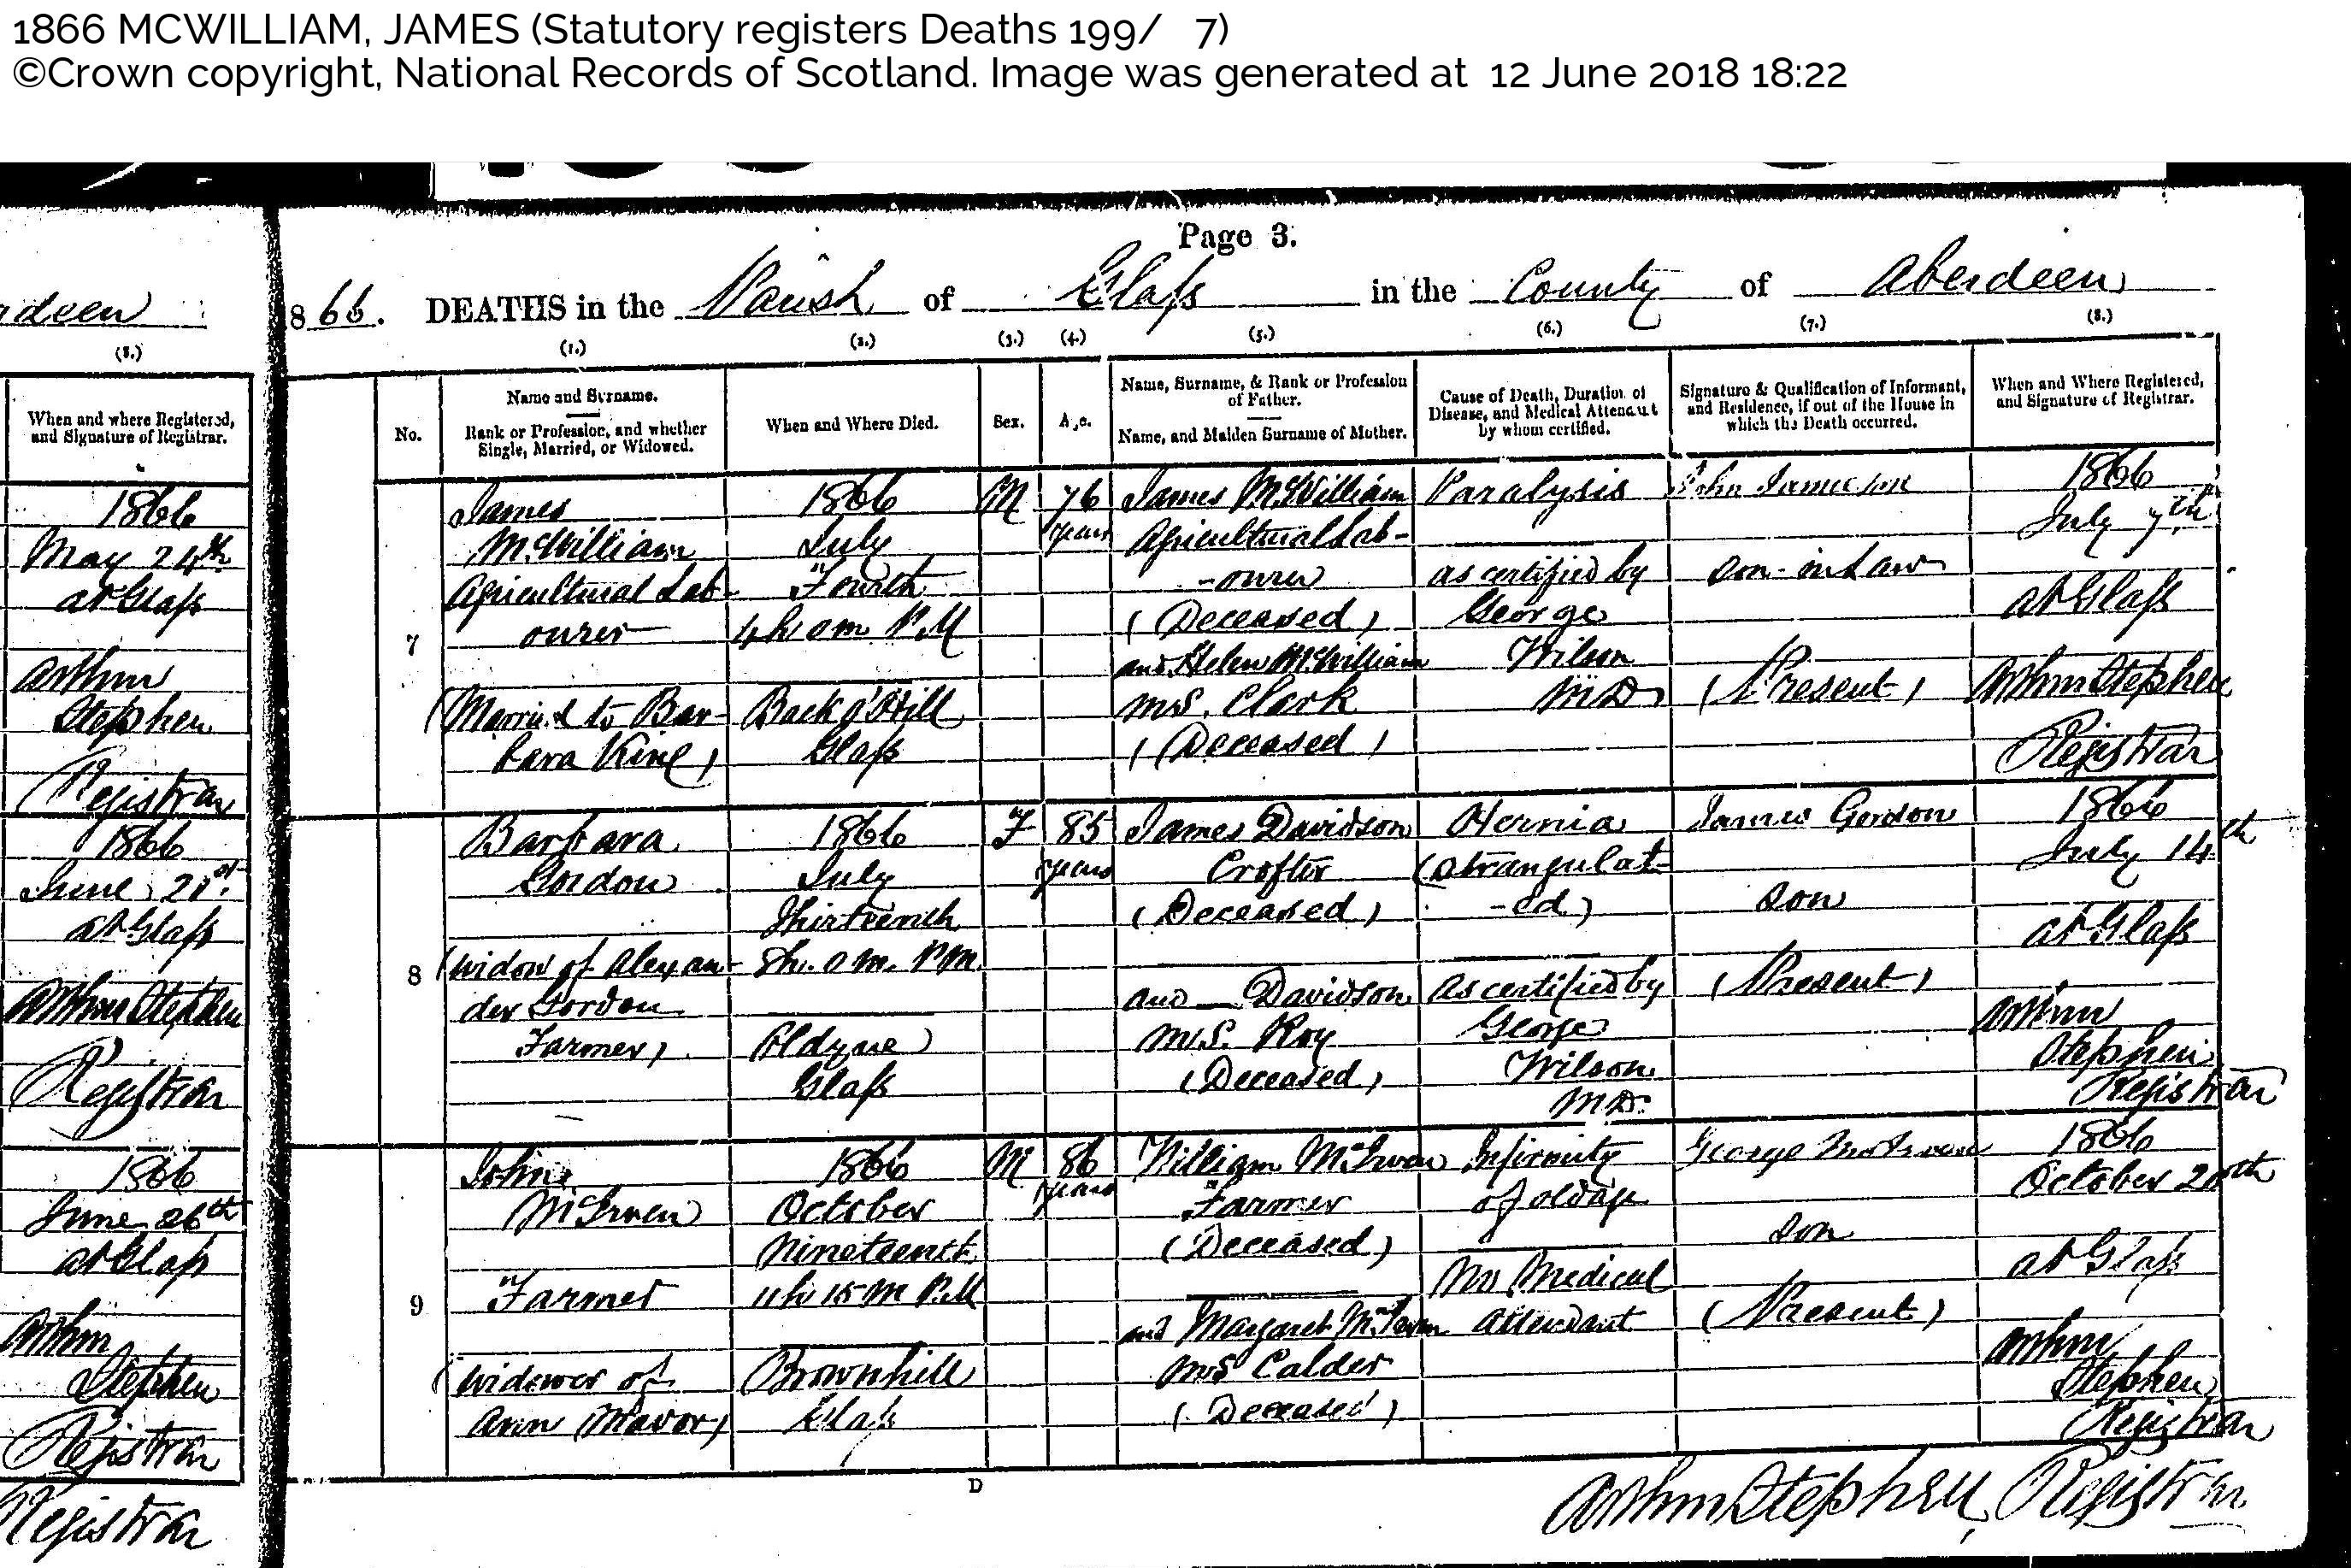 JamesMcWilliam_D1866 Glass Banffshire, July 4, 1866